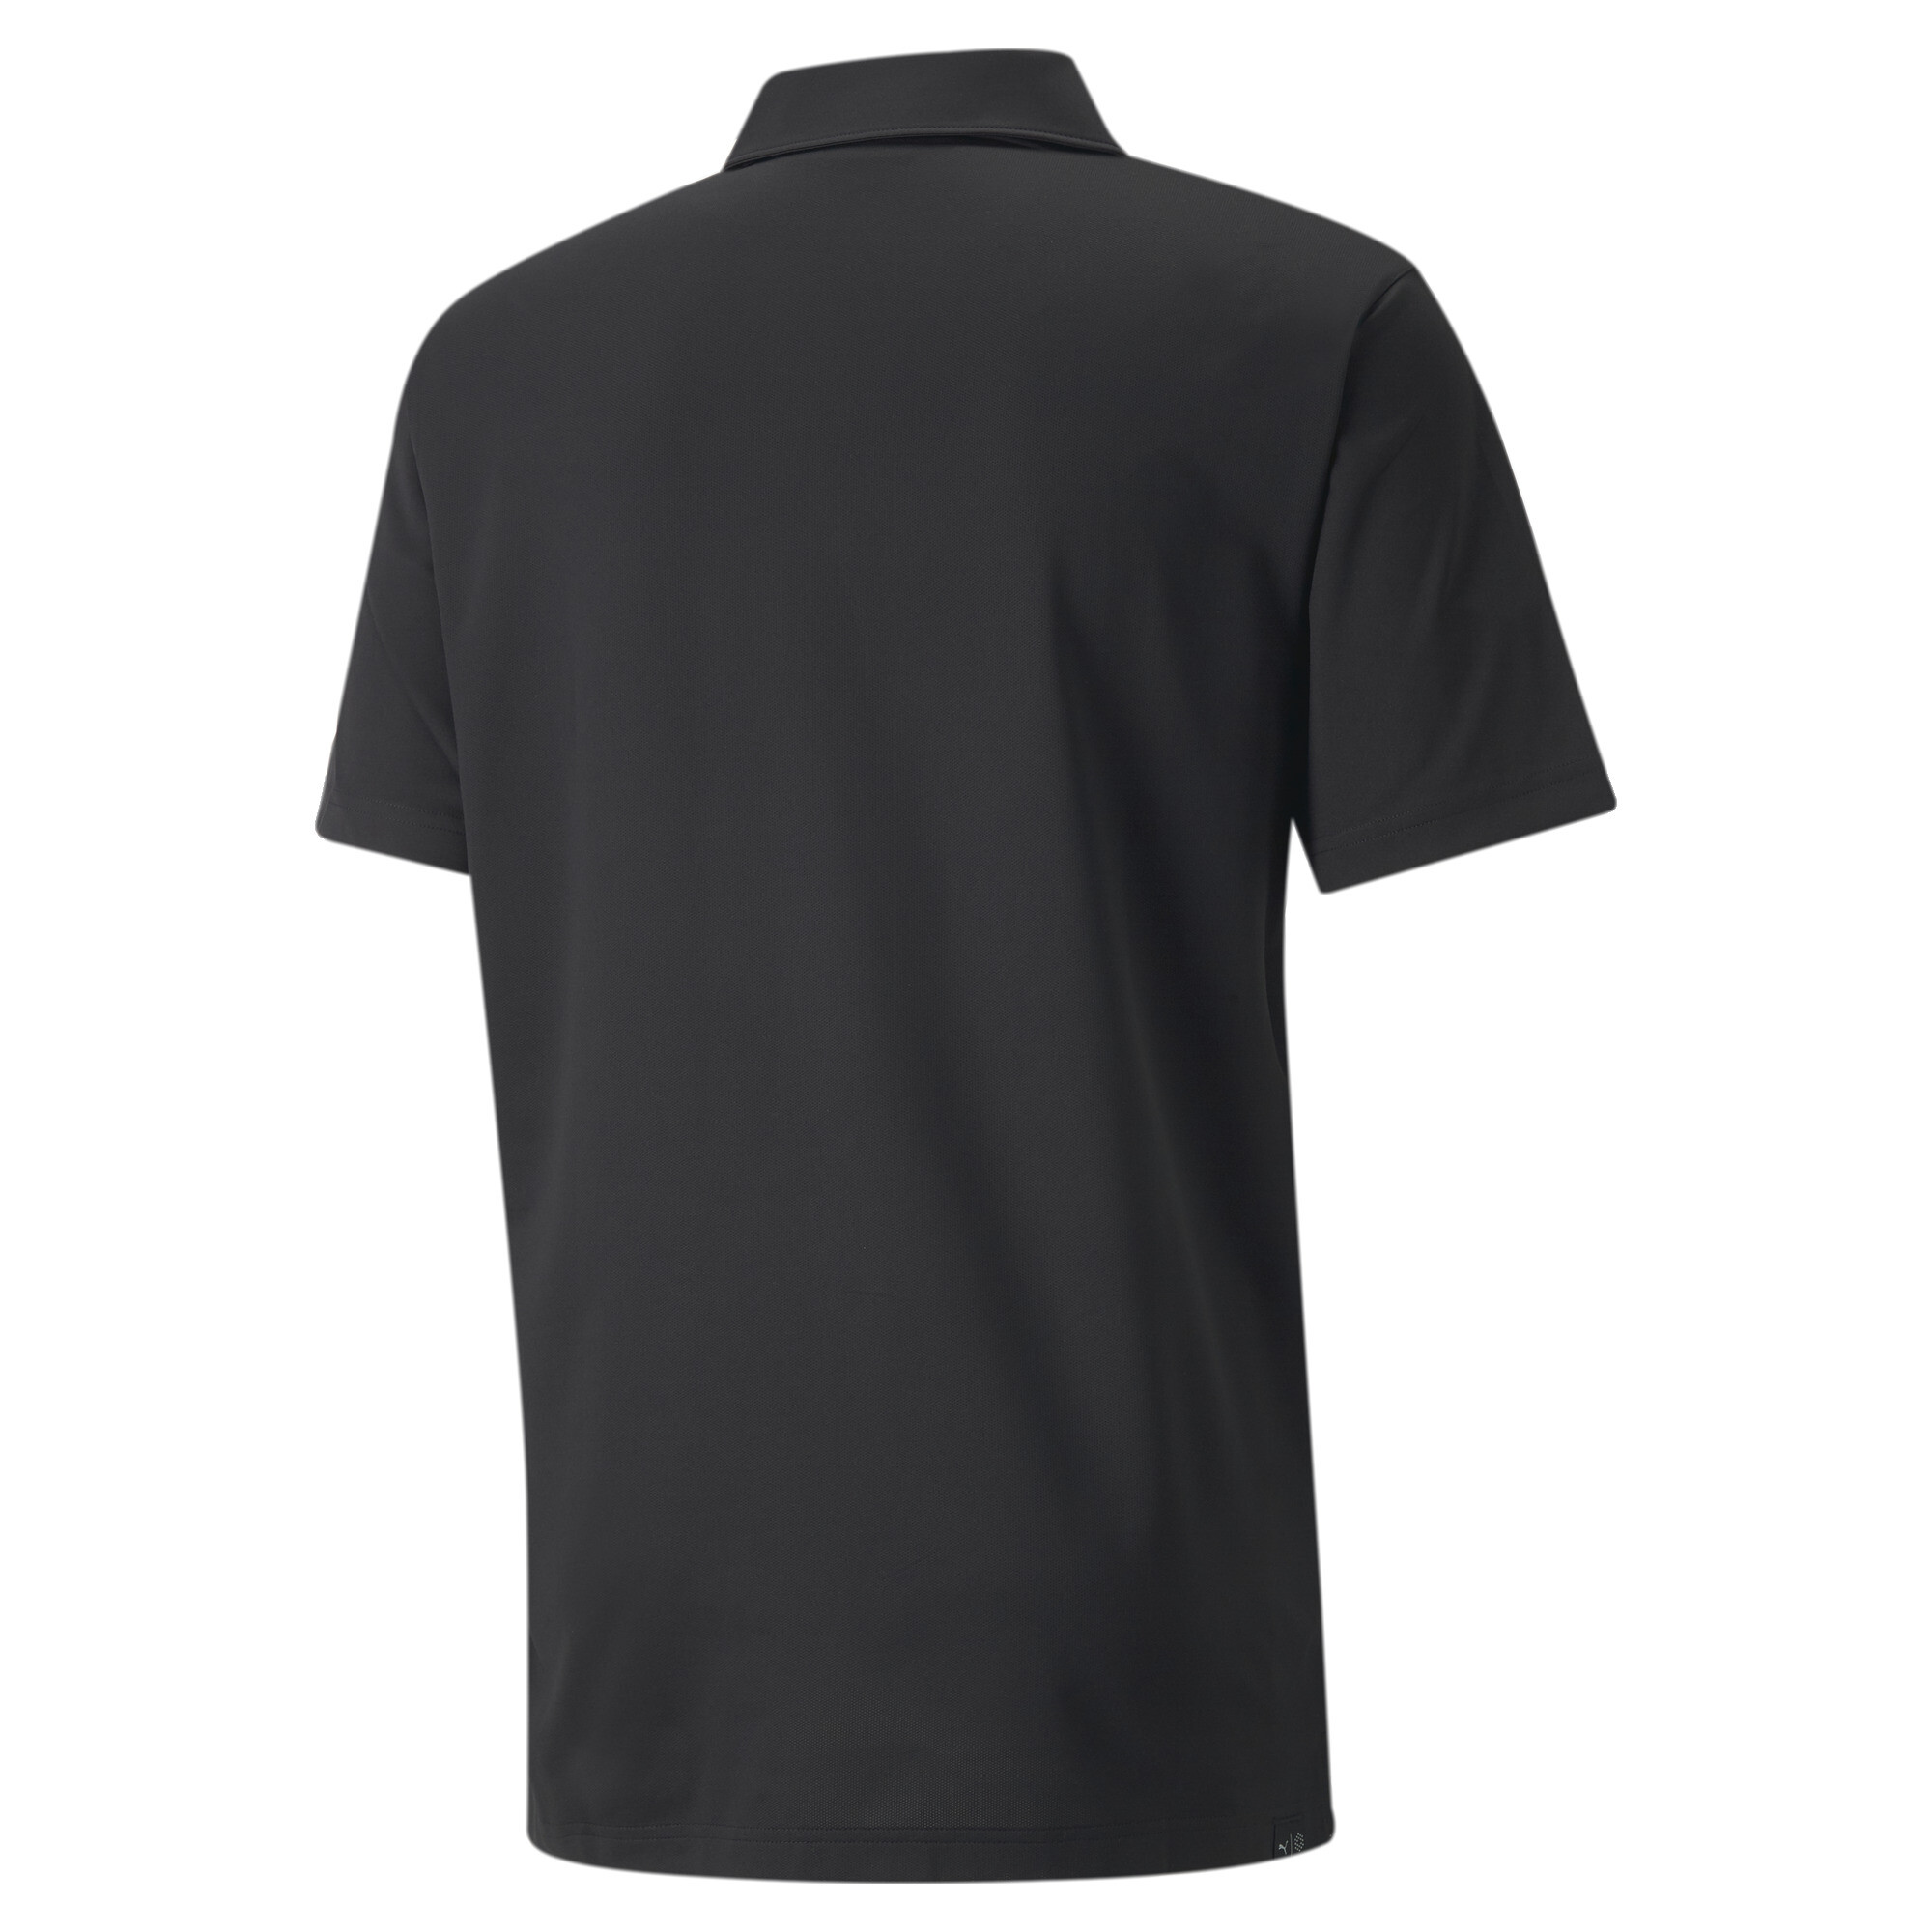 Men's Puma Gamer's Golf Polo Shirt T-Shirt, Black T-Shirt, Size XXL T-Shirt, Clothing